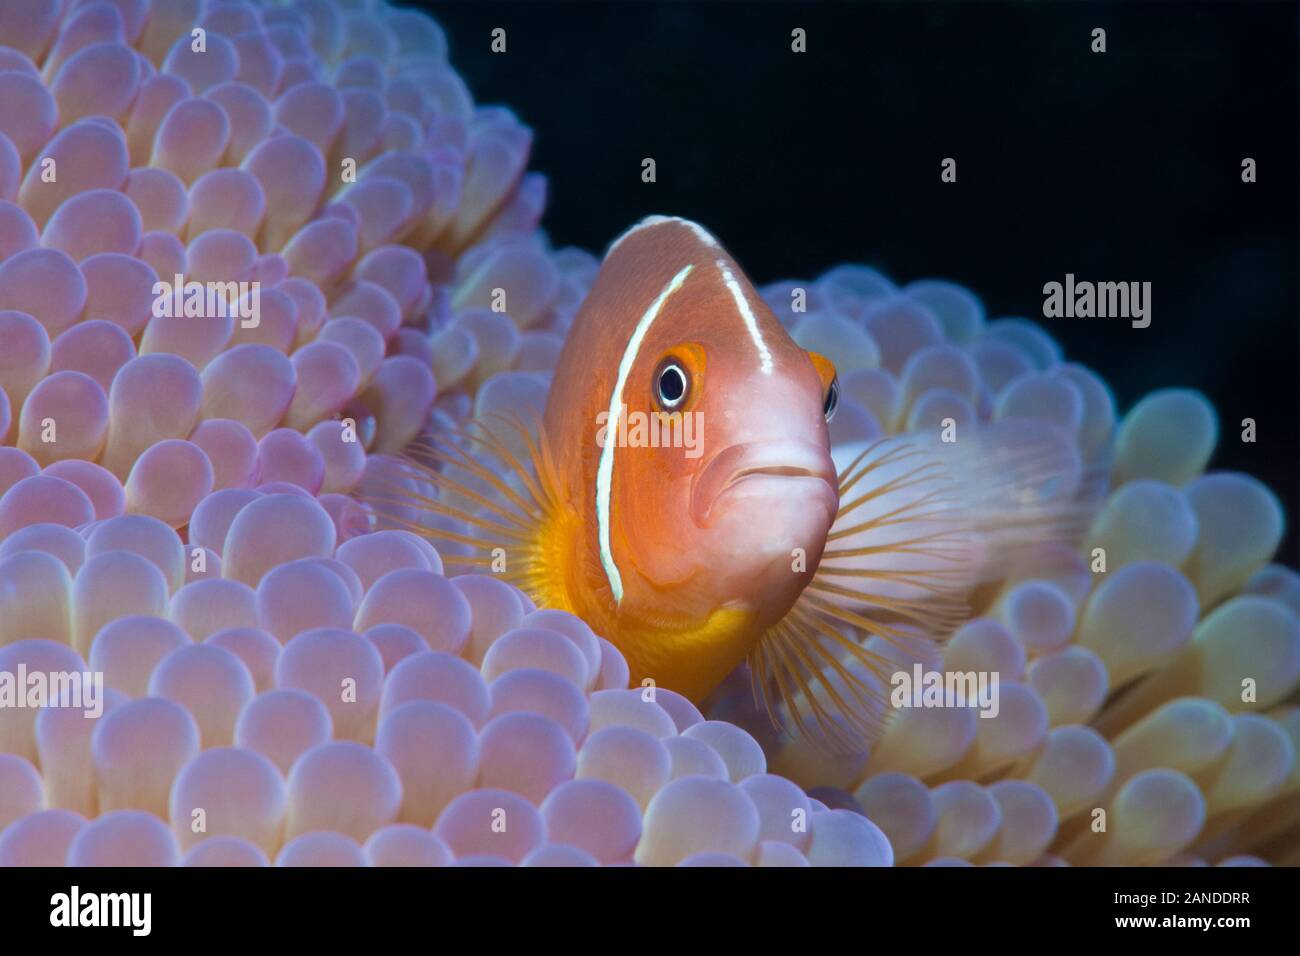 Rosa Anemonenfischen, Amphiprion perideraion, in seinem Wirt, prächtige Seeanemone, Heteractis magnifica, Gau, Lomaiviti, Fidschi, South Pacific Ocean Stockfoto